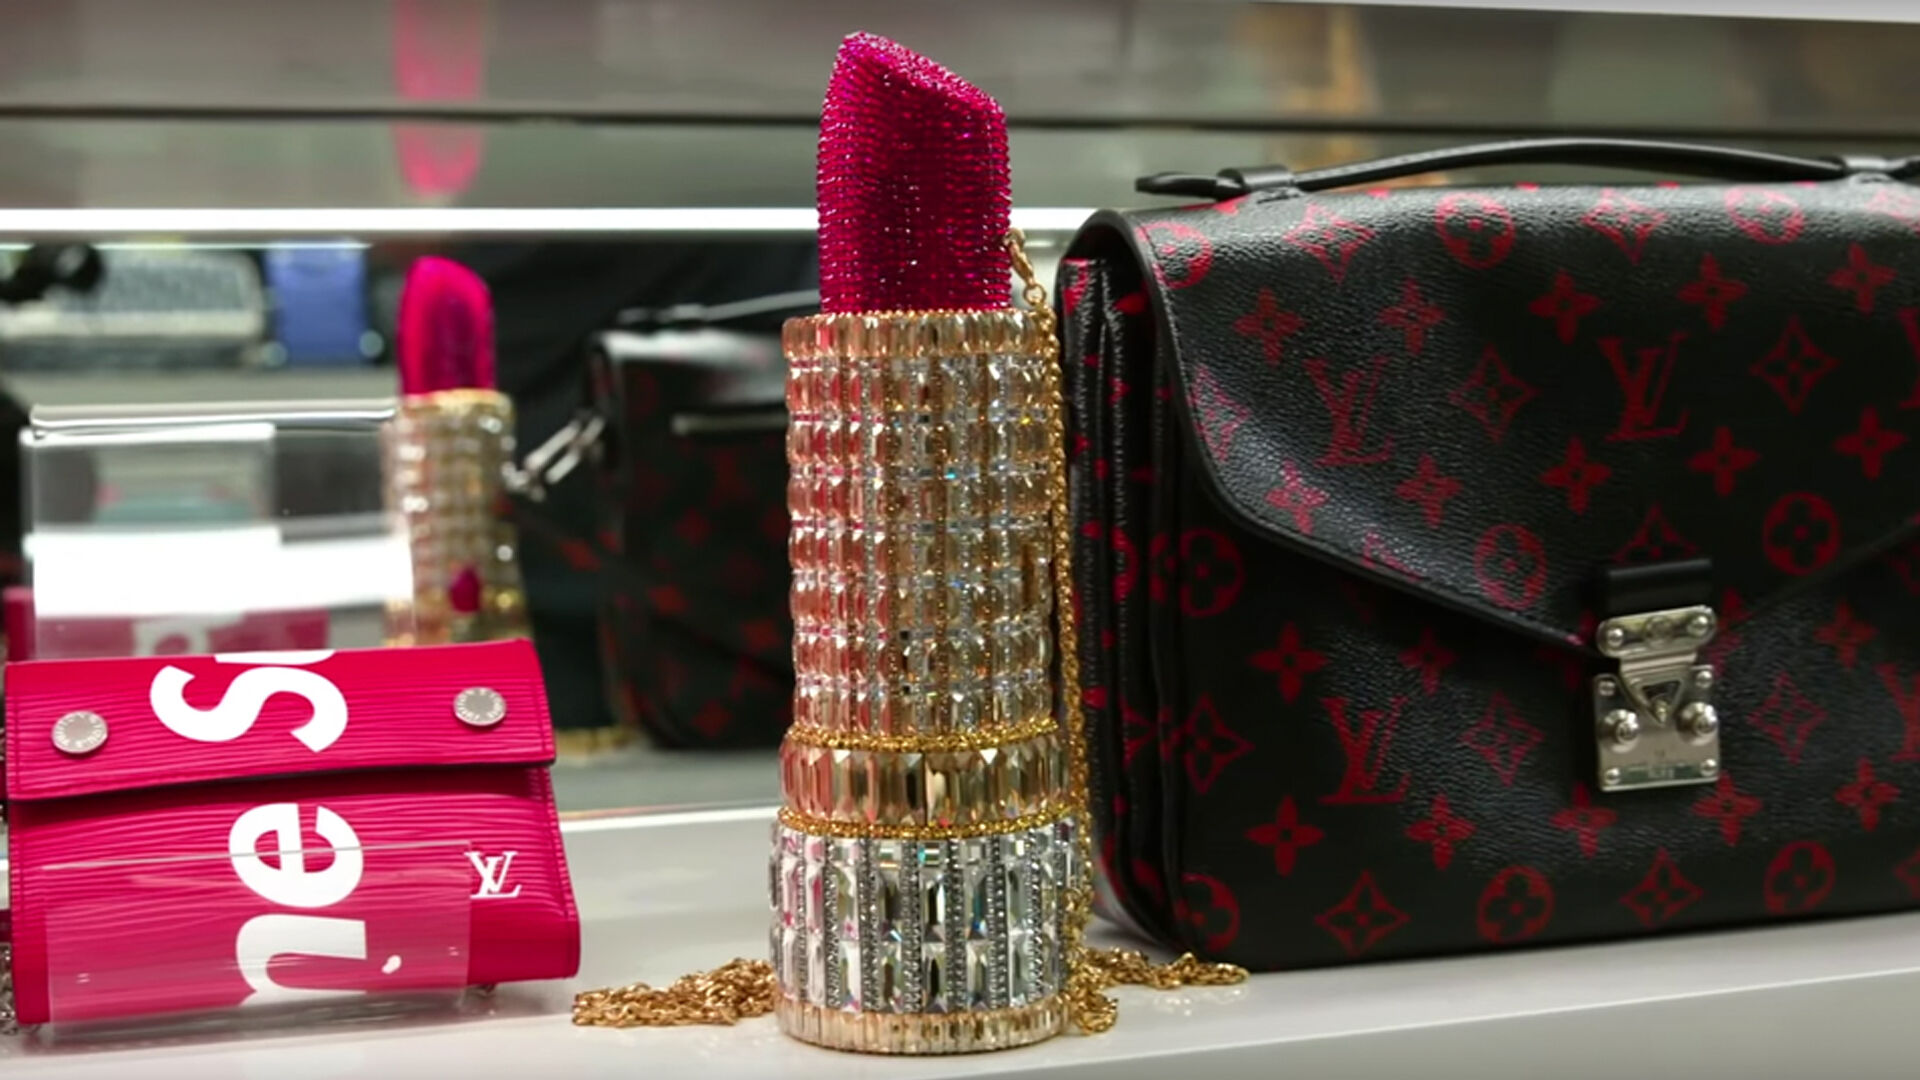 Kylie Jenner shows off mom Kris' new purse closet